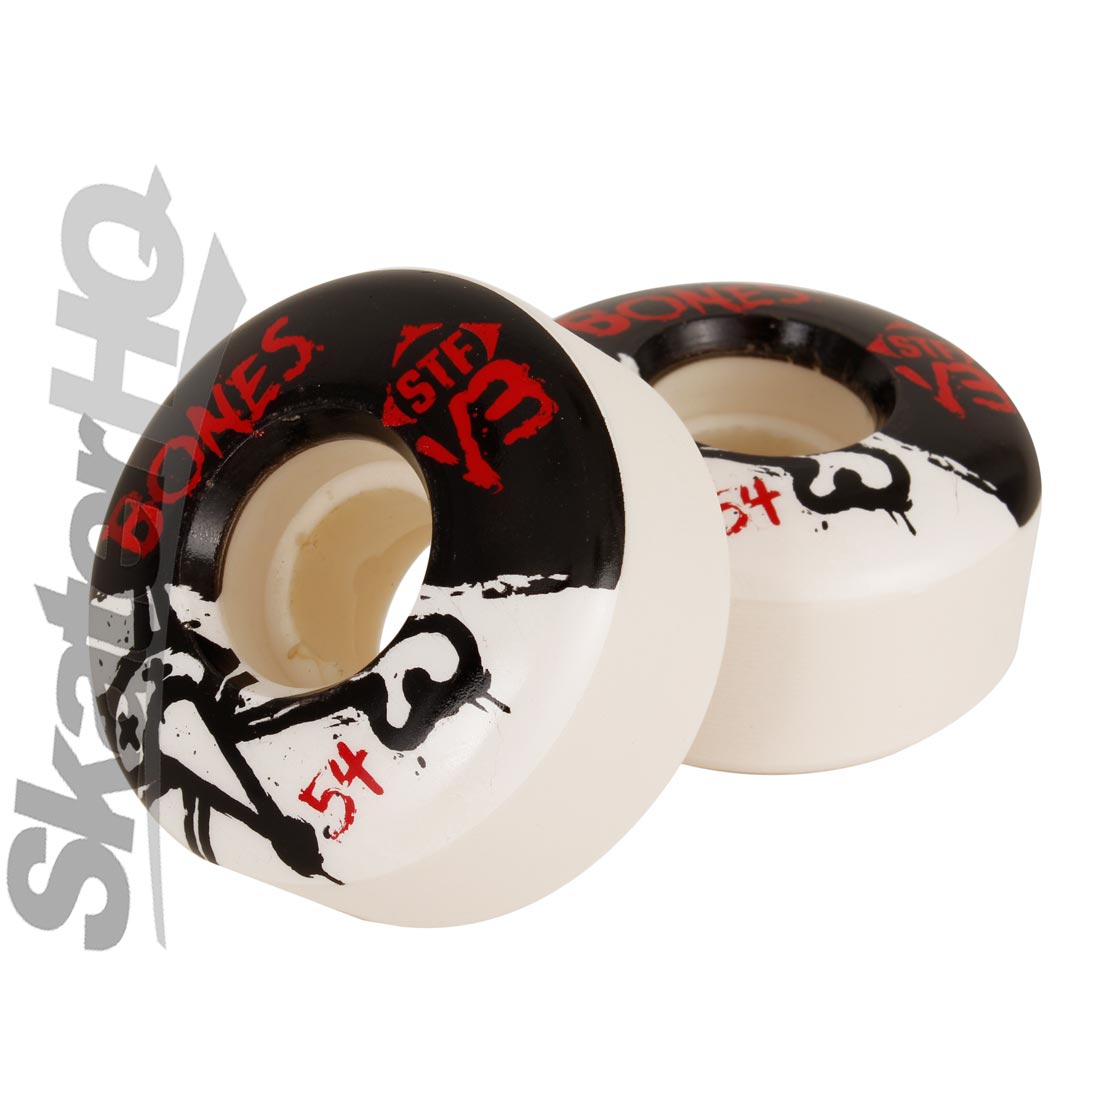 Bones STF V3 Series 54mm - White Skateboard Wheels